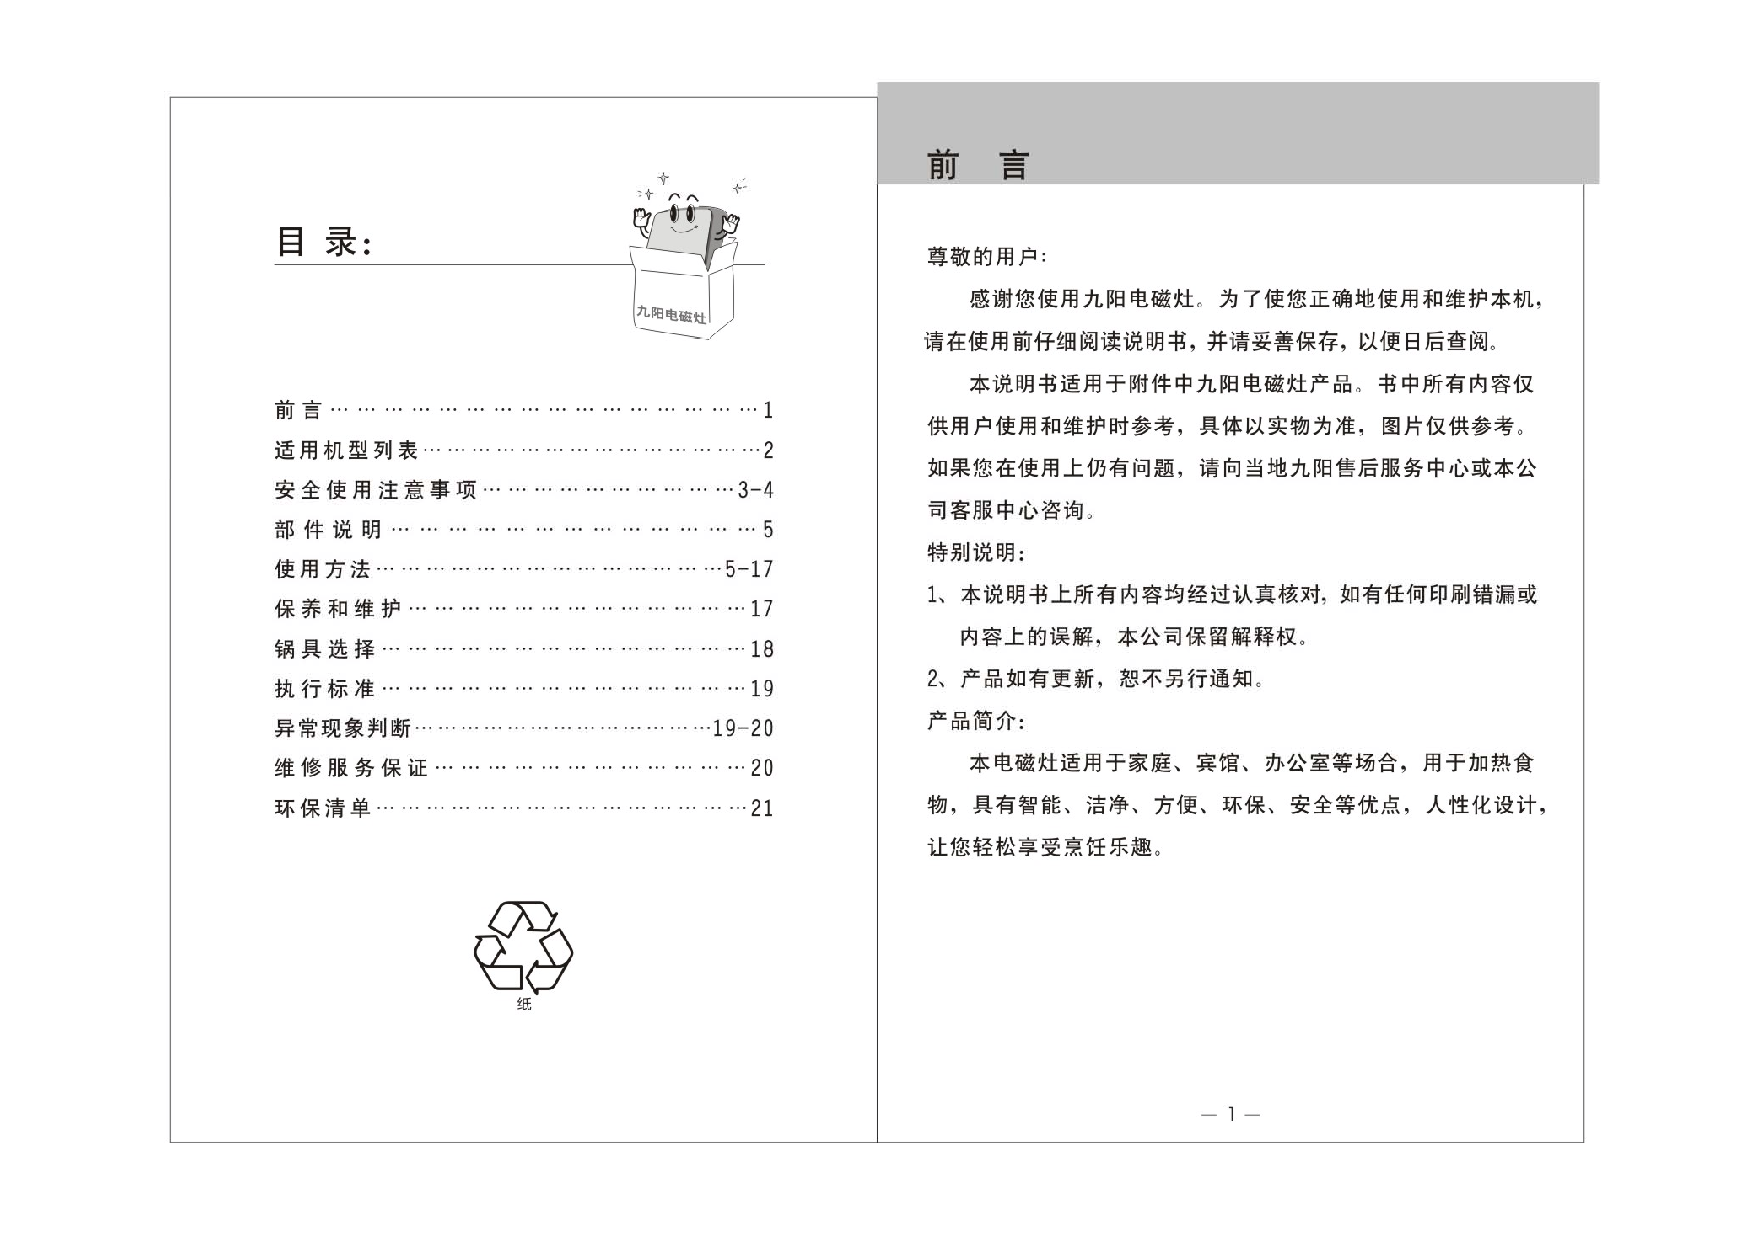 九阳 Joyyoung C21-DC001, JYC-21HEC05 使用说明书 第1页